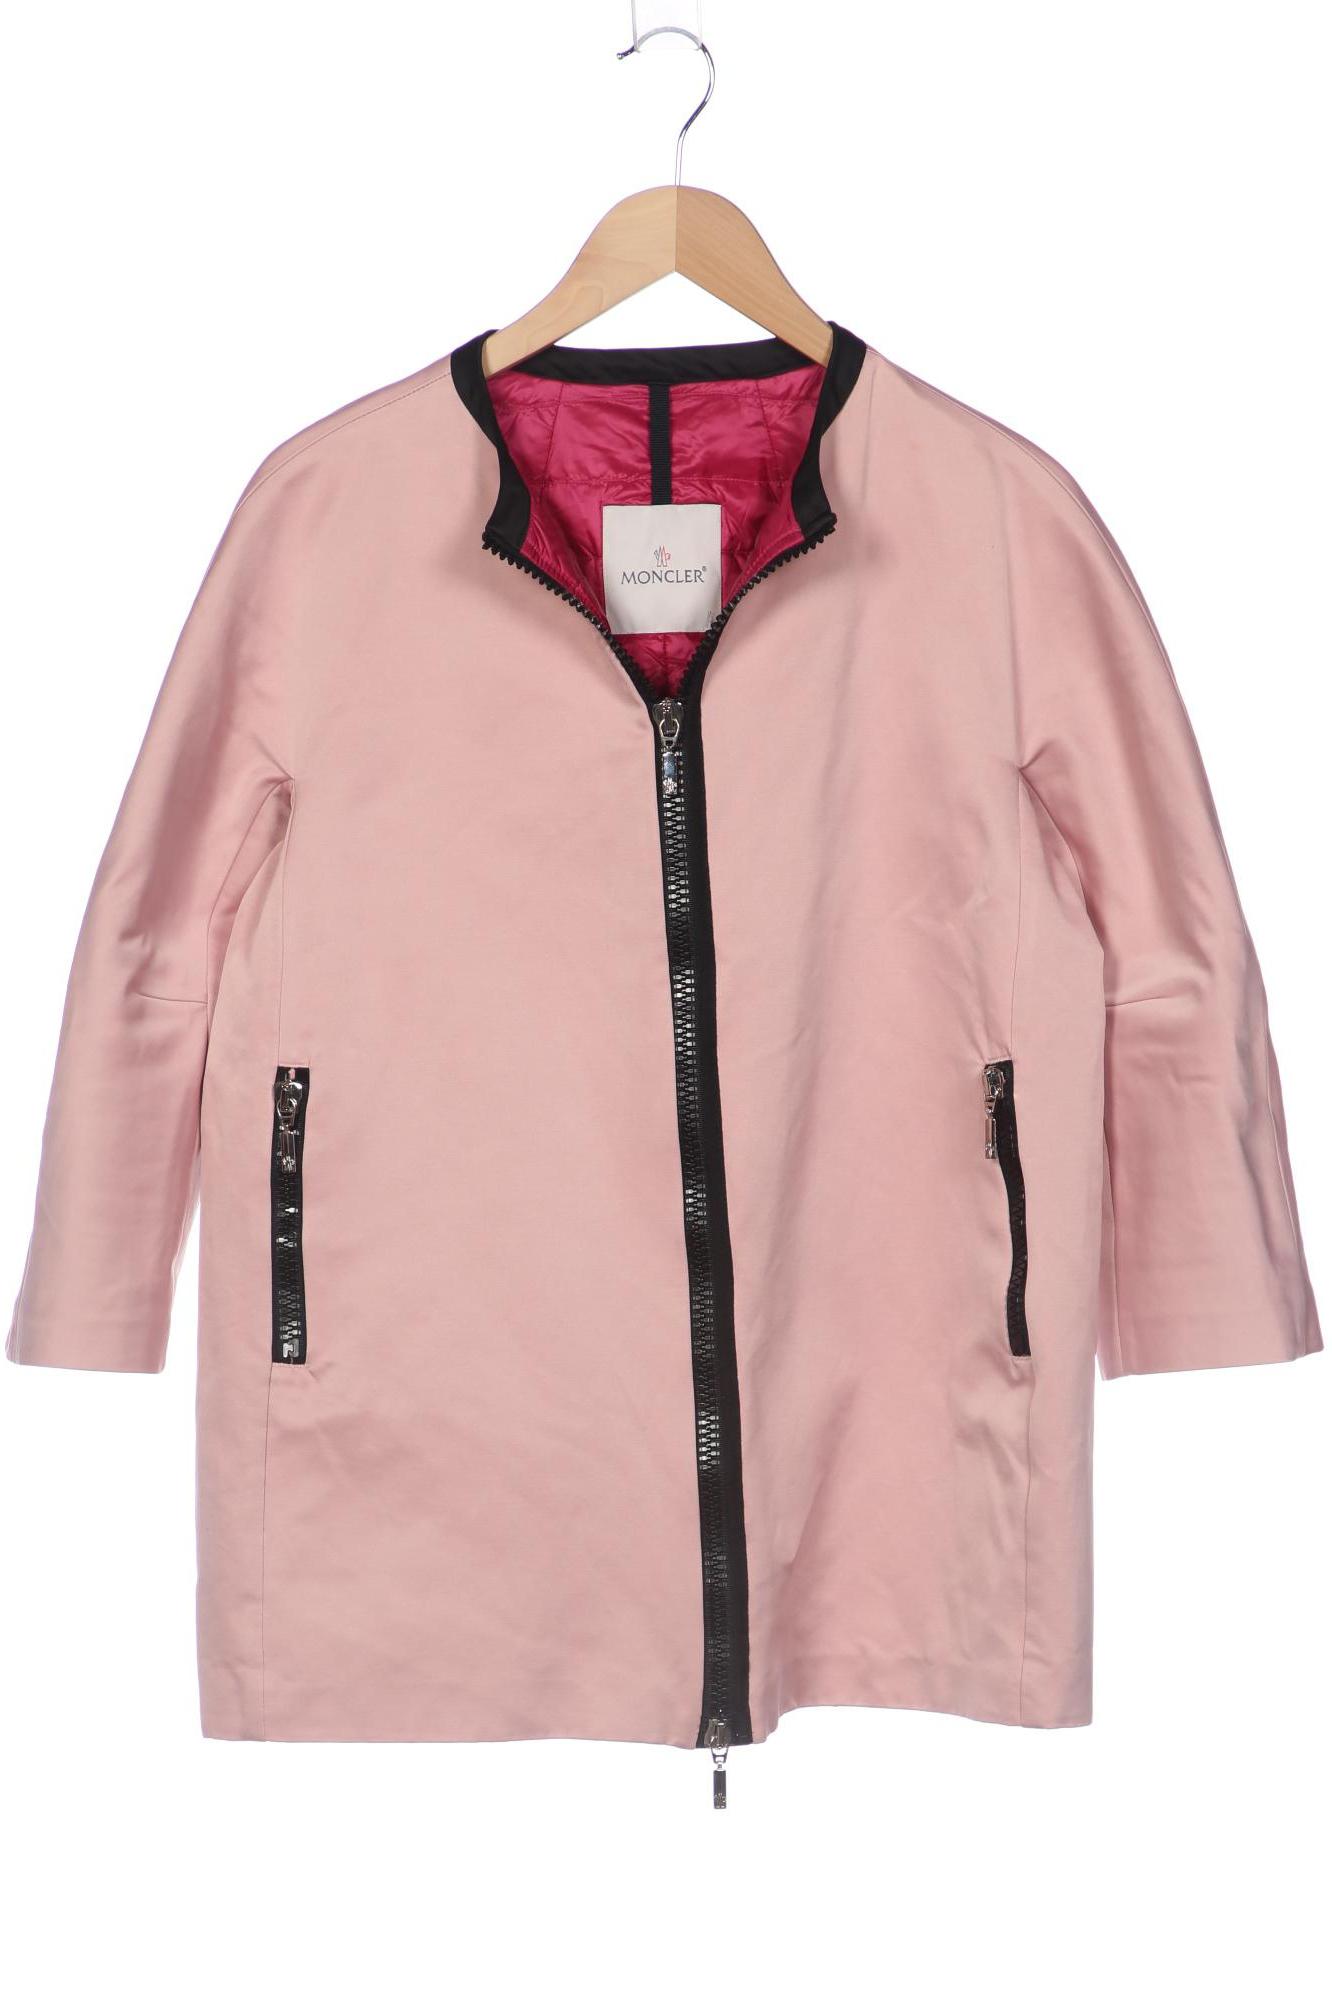 Moncler Damen Mantel, pink von Moncler